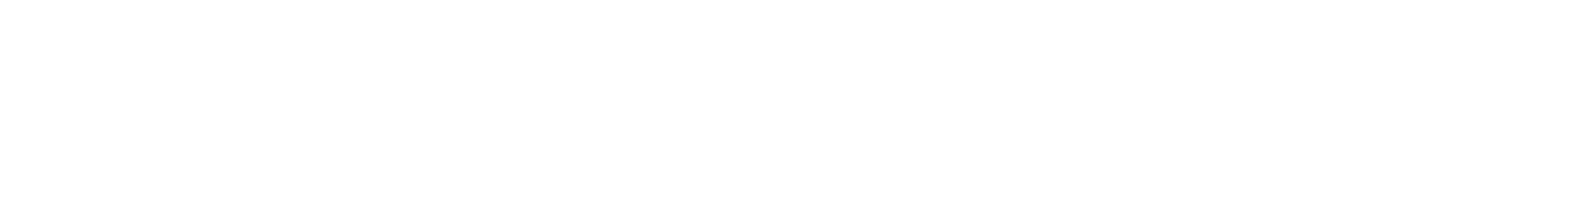 Buenaventura Mining Company  logo large for dark backgrounds (transparent PNG)